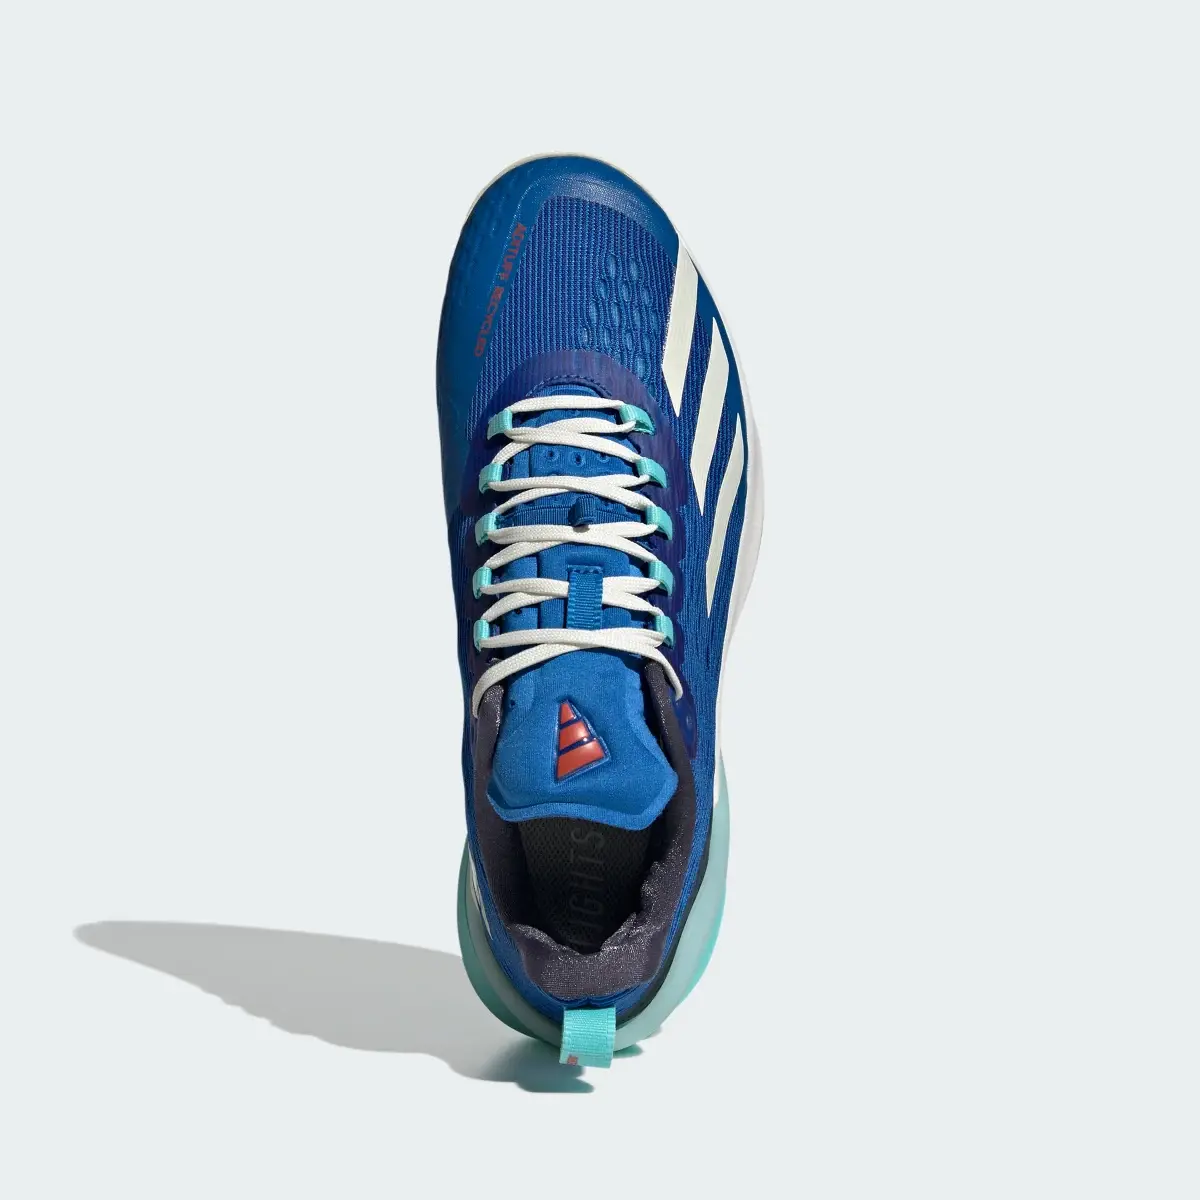 Adidas adizero Cybersonic Tenis Ayakkabısı. 3